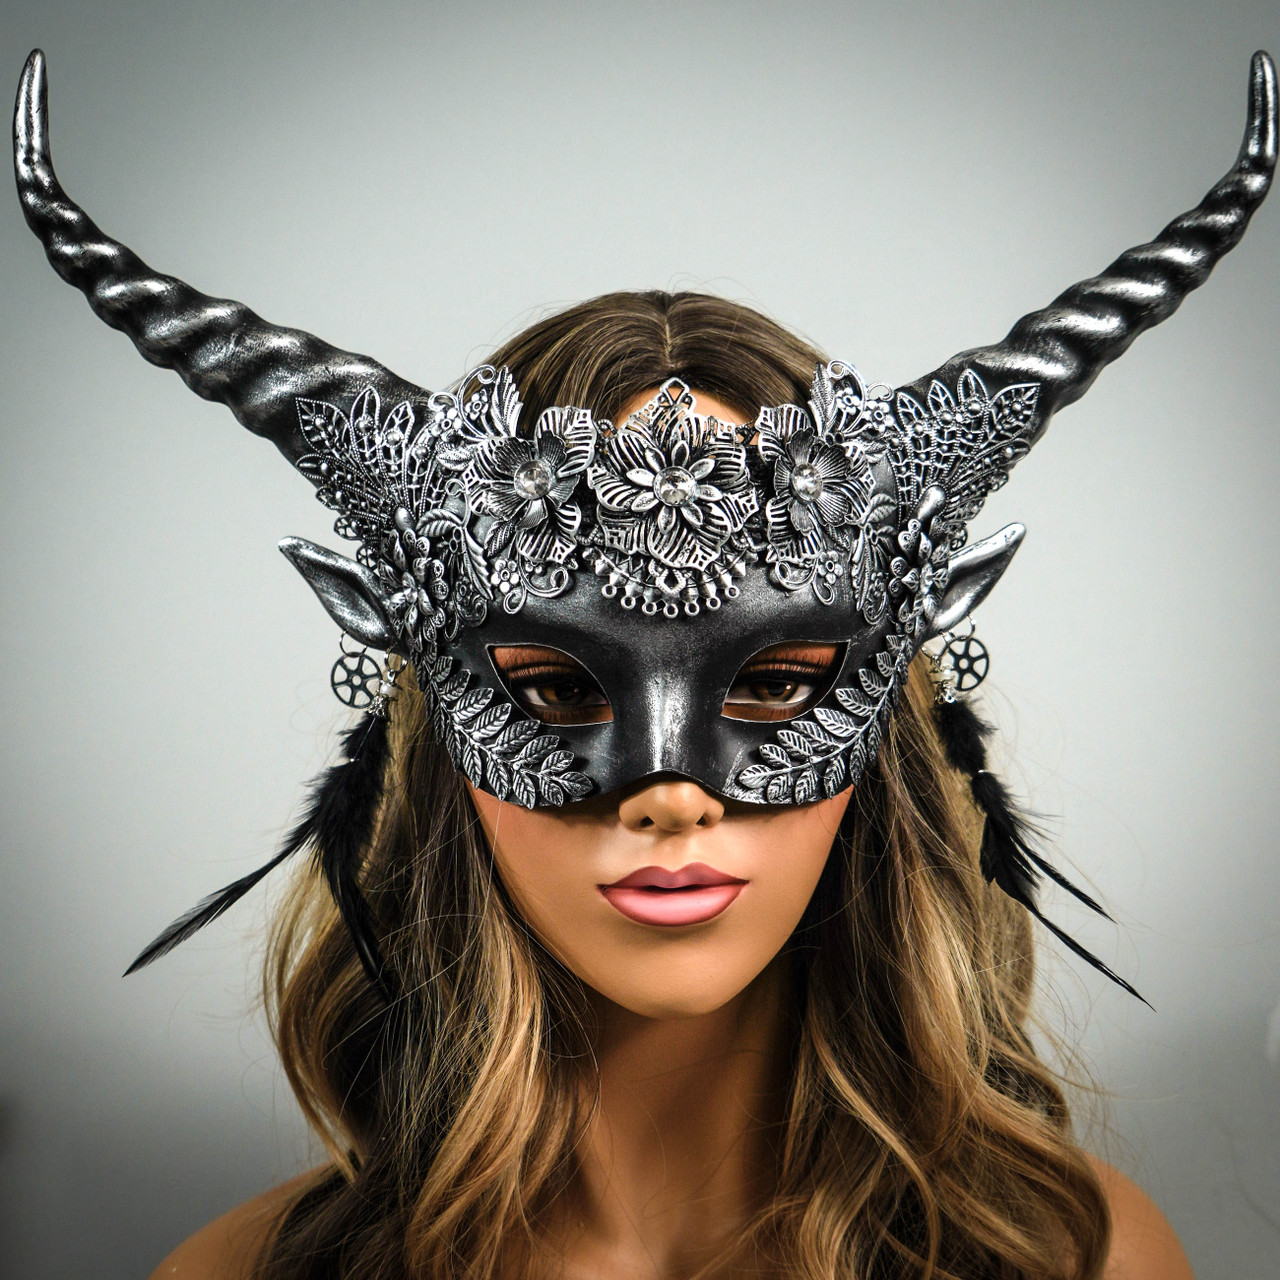 Animal Masquerade Party Mask for Men and Masquerade Ball Free Ship